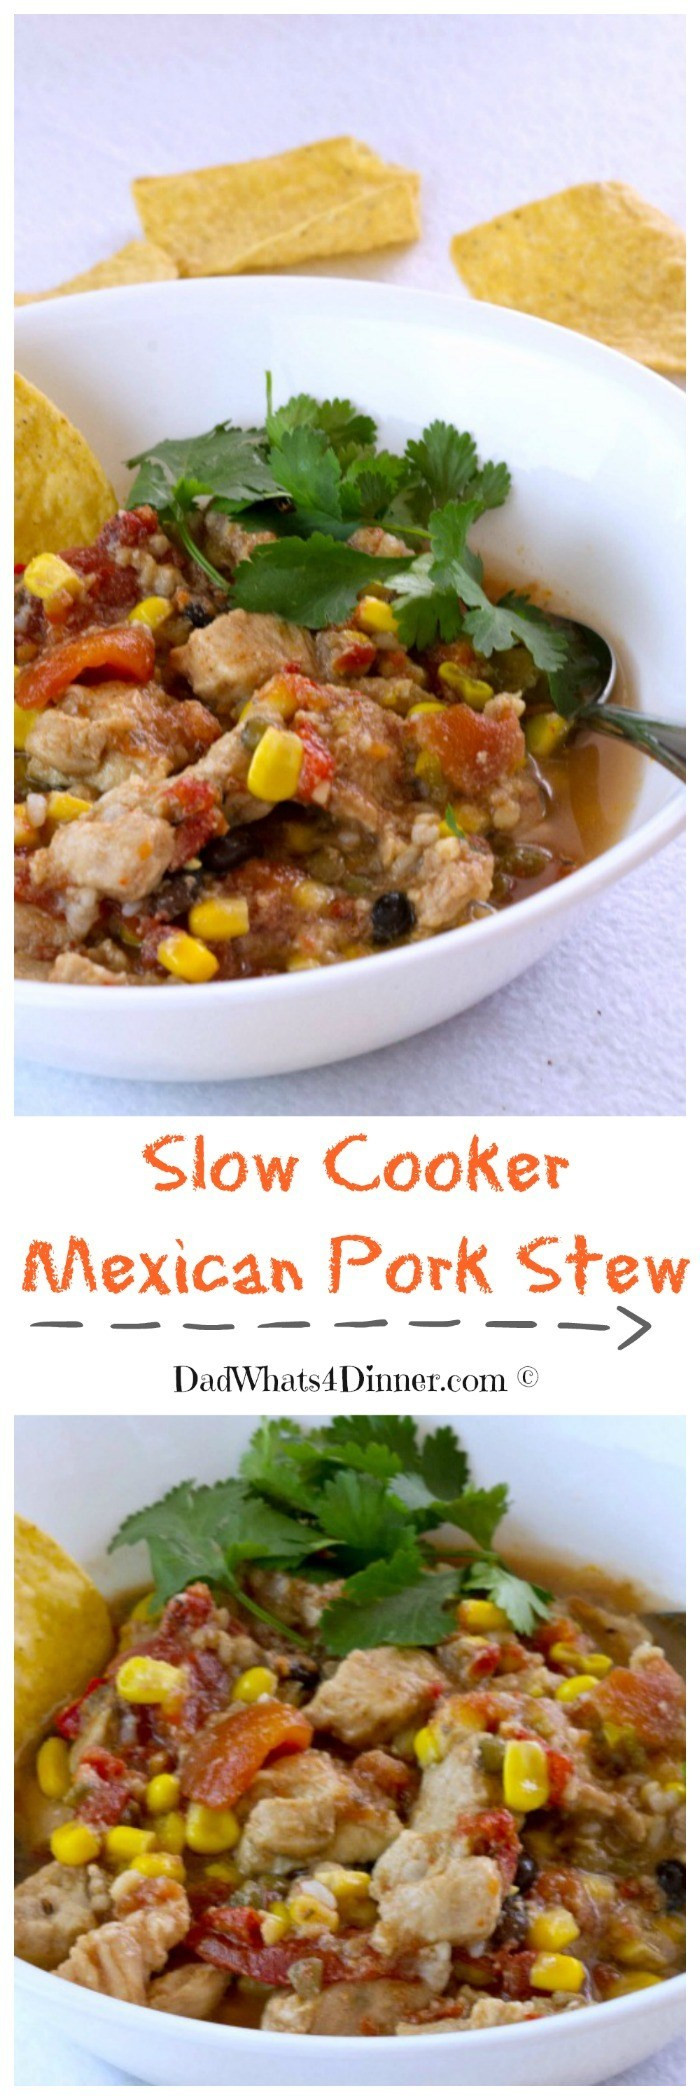 Mexican Pork Stew
 Slow Cooker Mexican Pork Stew